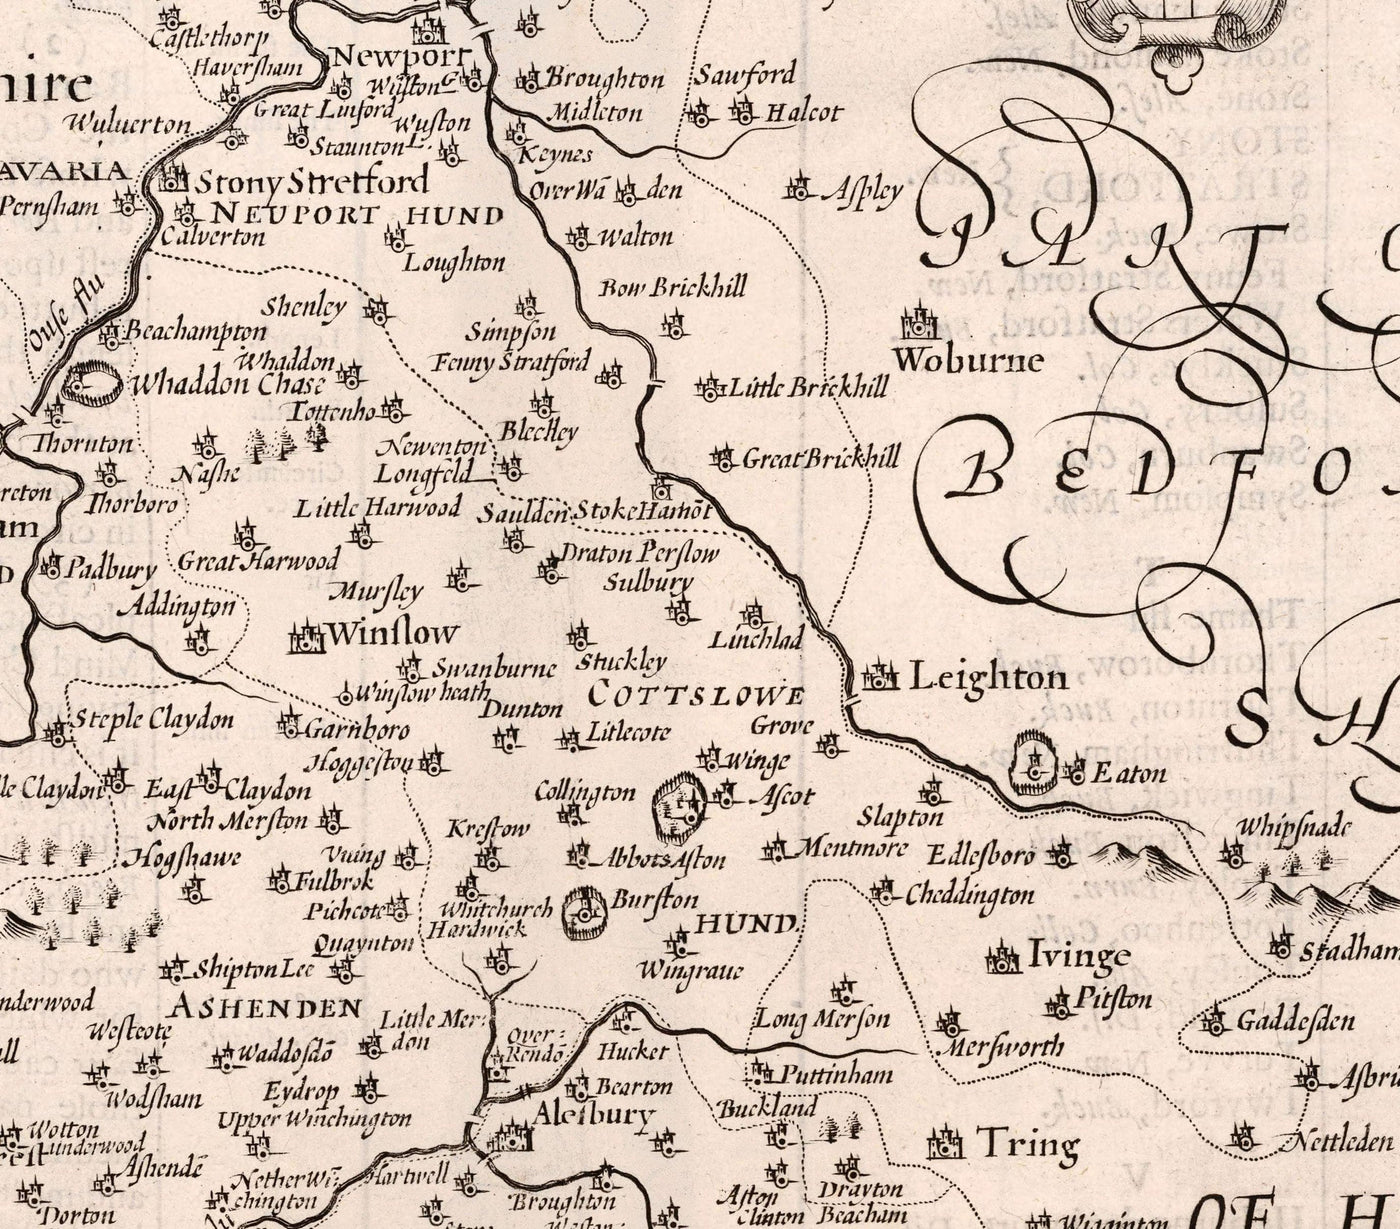 Vieille carte monochrome de Buckinghamshire en 1611 par John Speed ​​- High Wycombe, Amersham, Buckingham, Milton Keynes